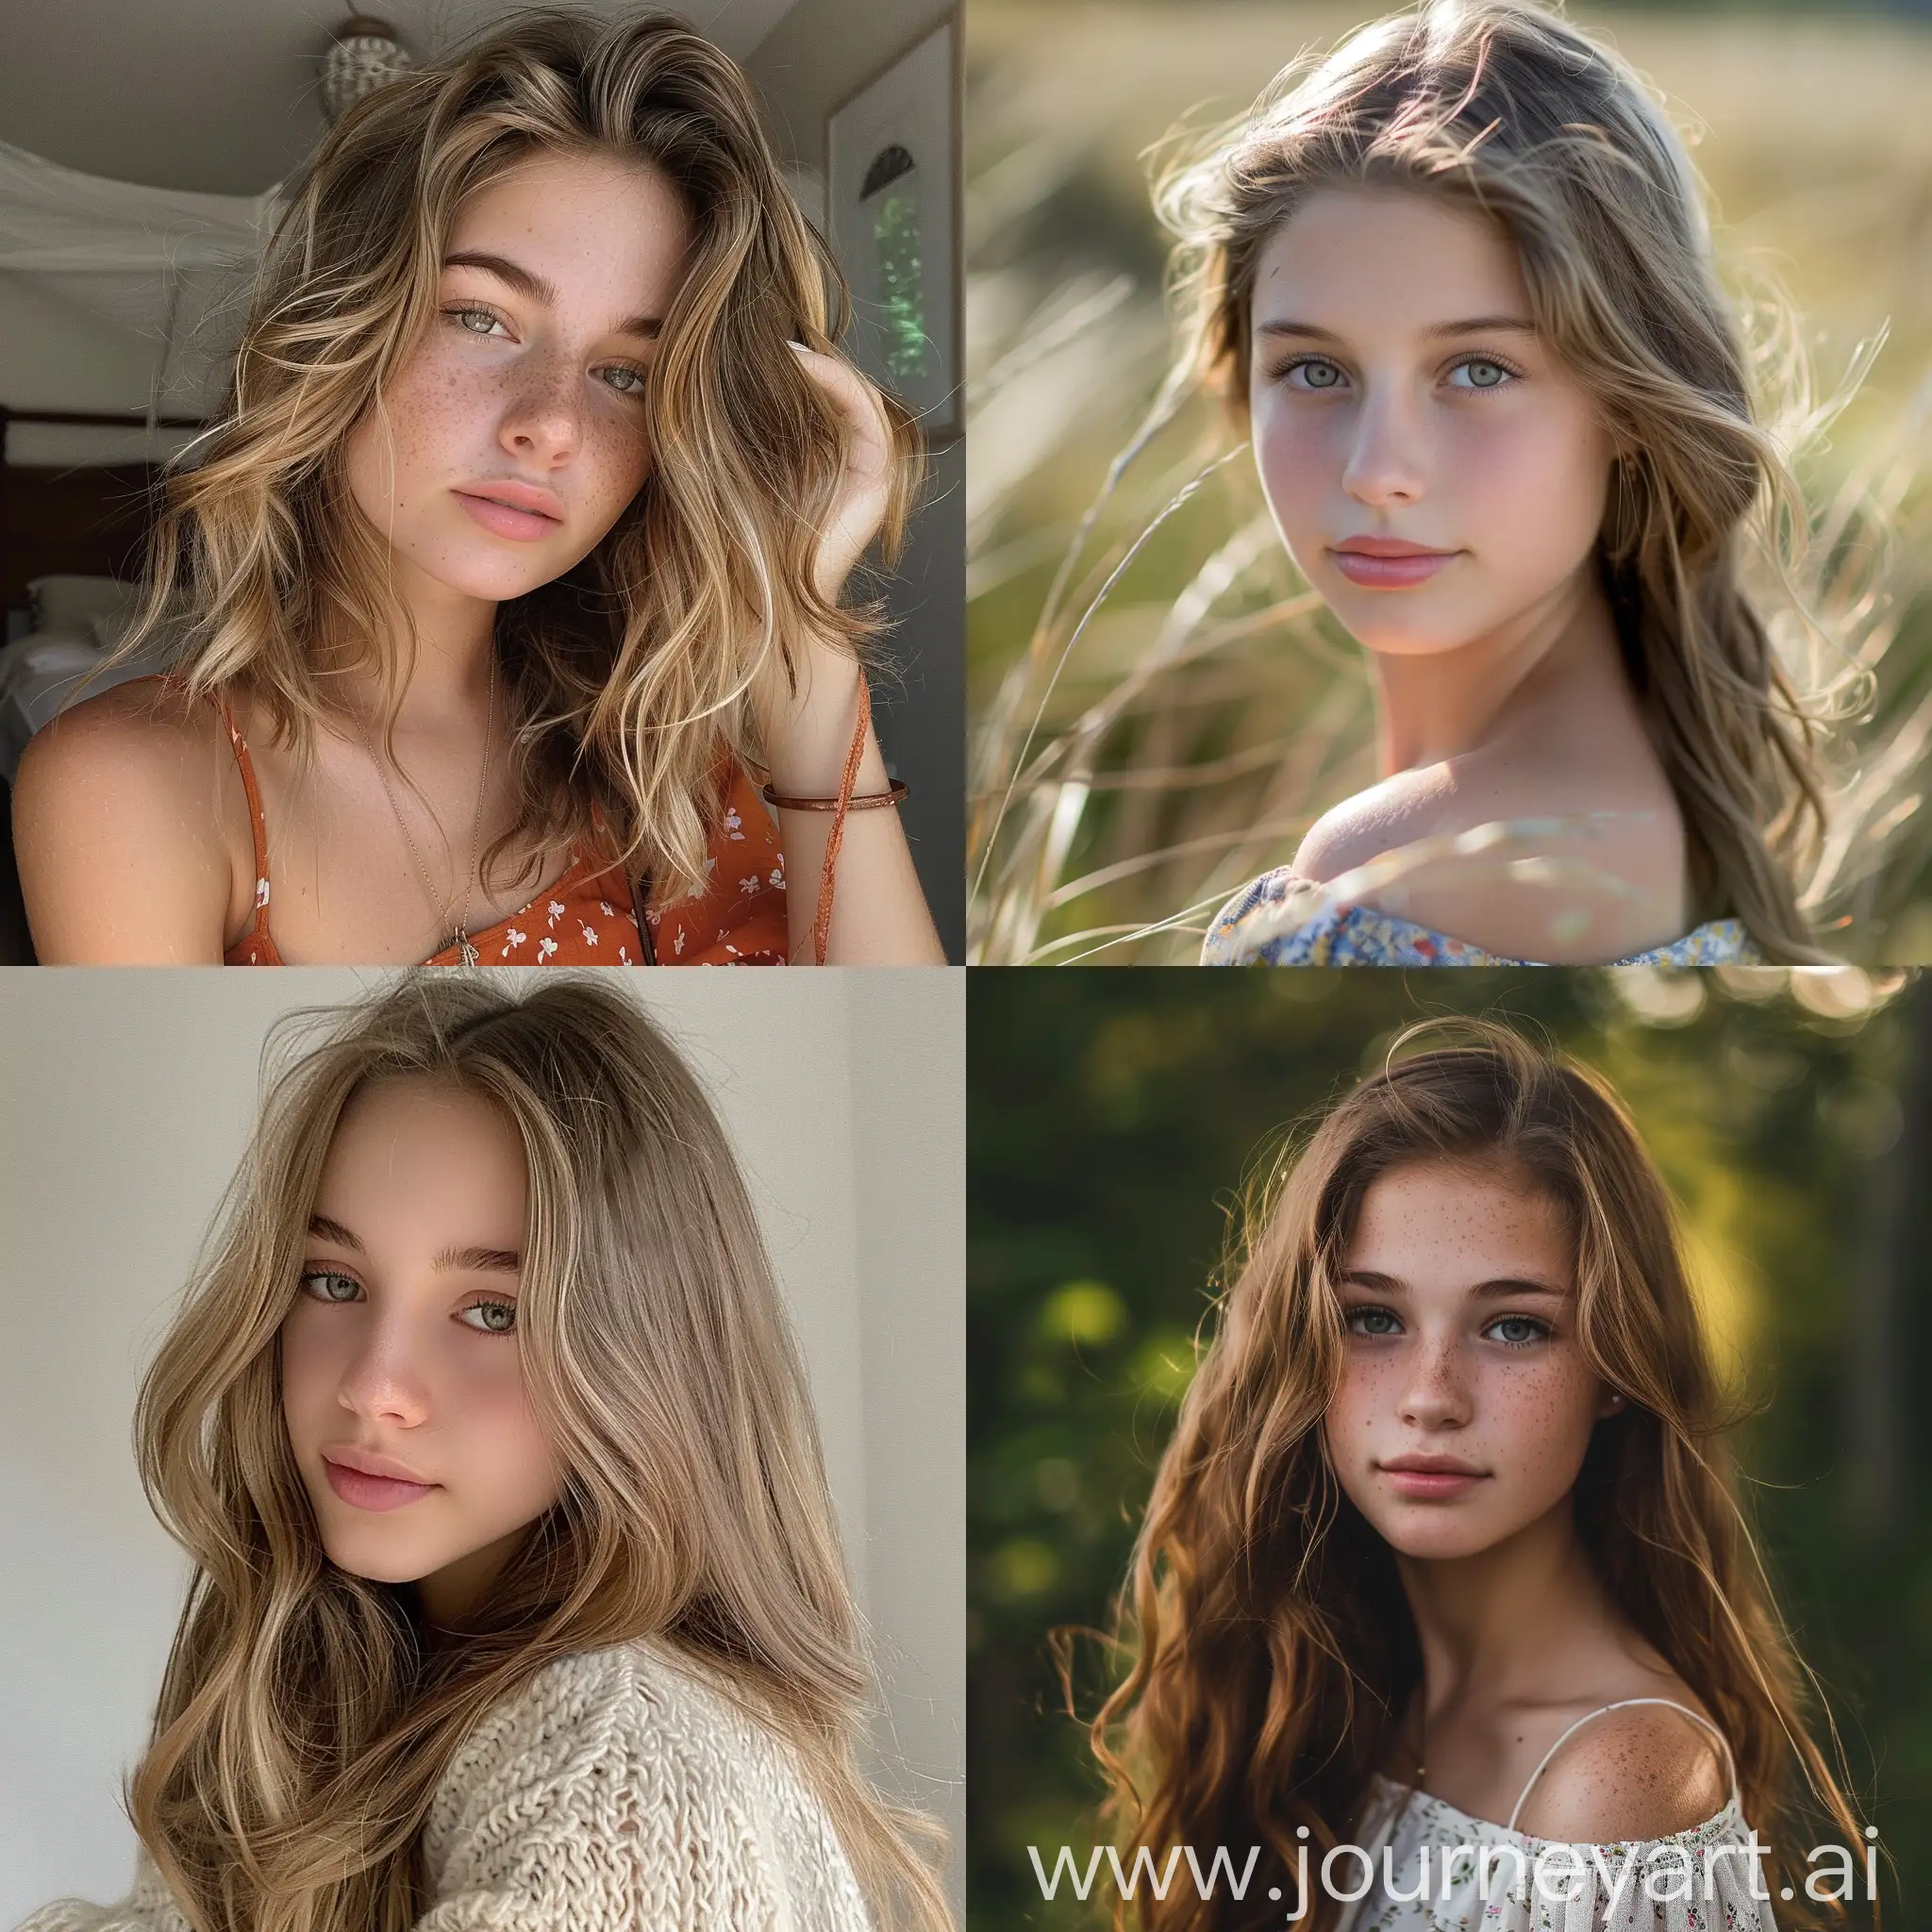 Gorgeous teenager girl